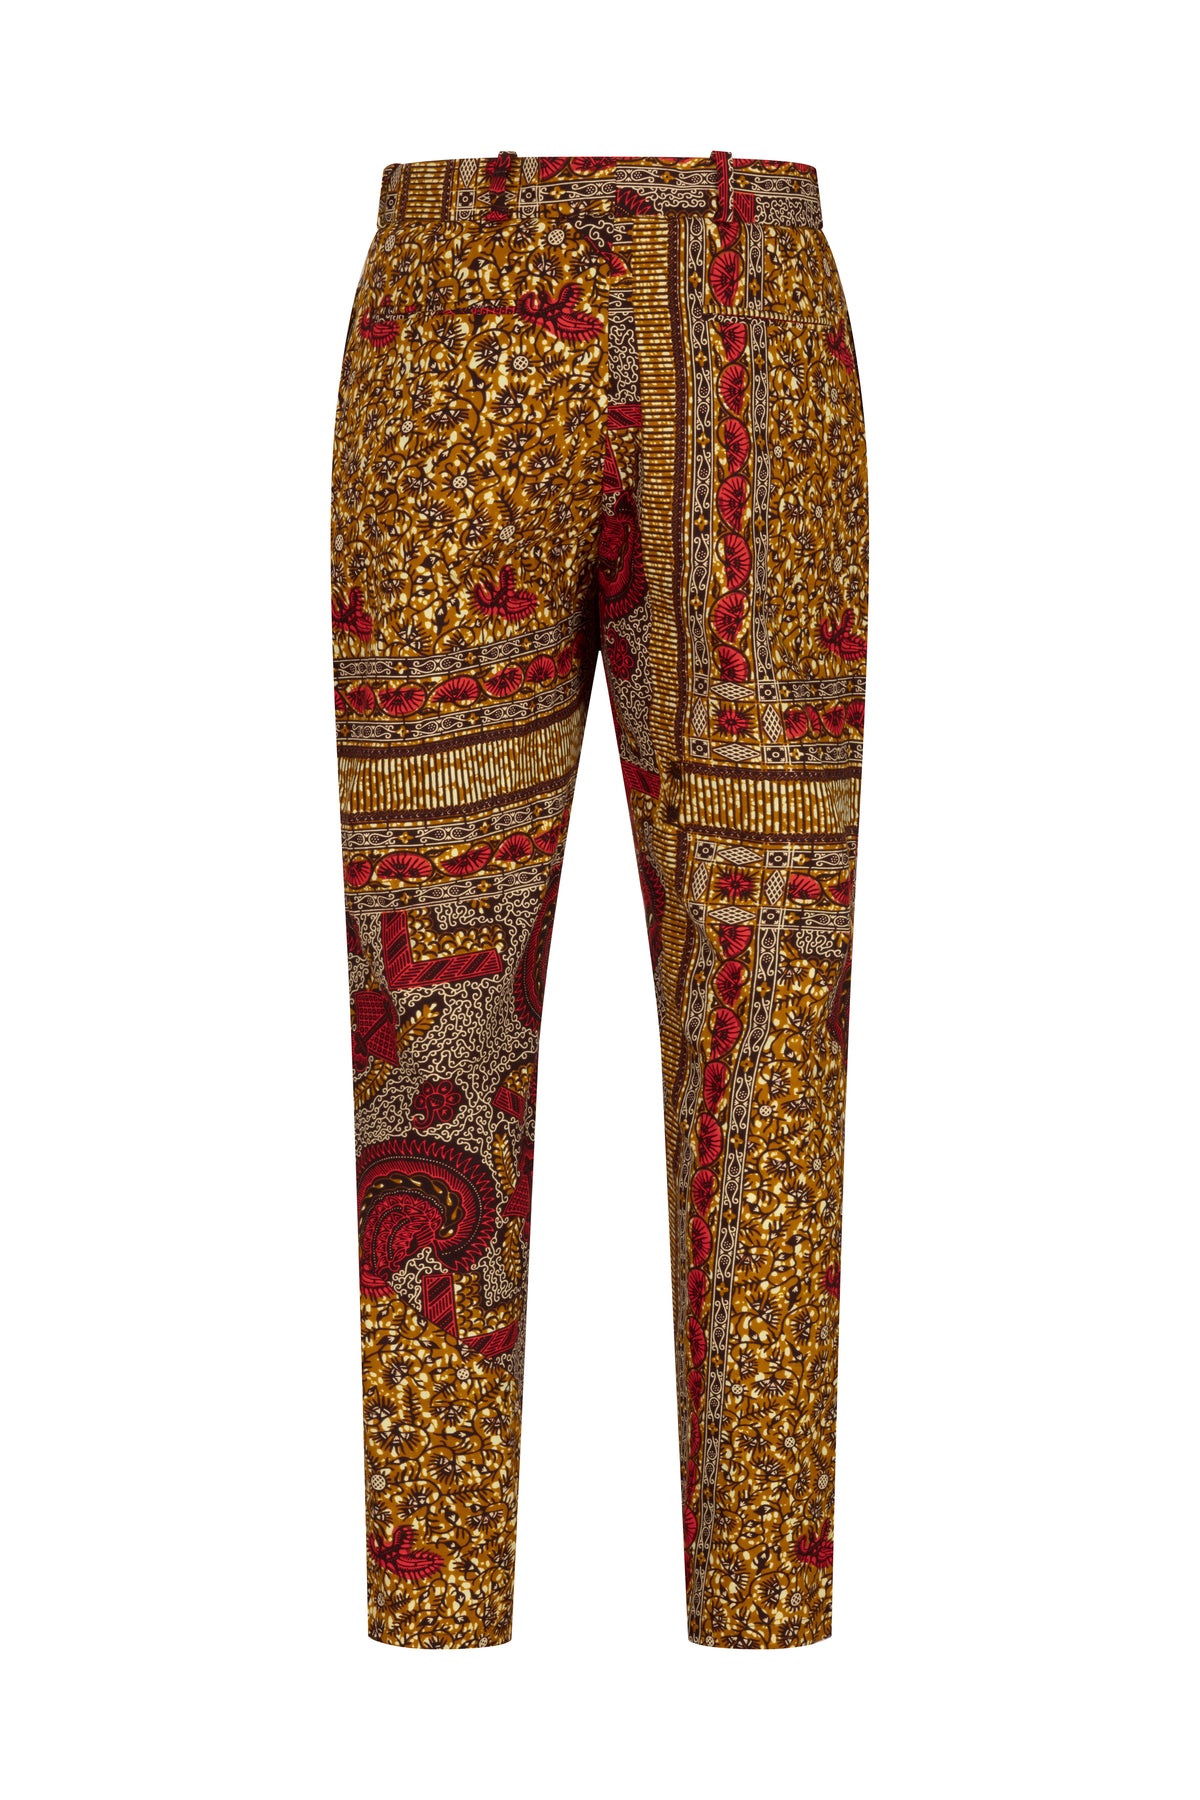 Osei straight leg trousers-Golden - OHEMA OHENE AFRICAN INSPIRED FASHION